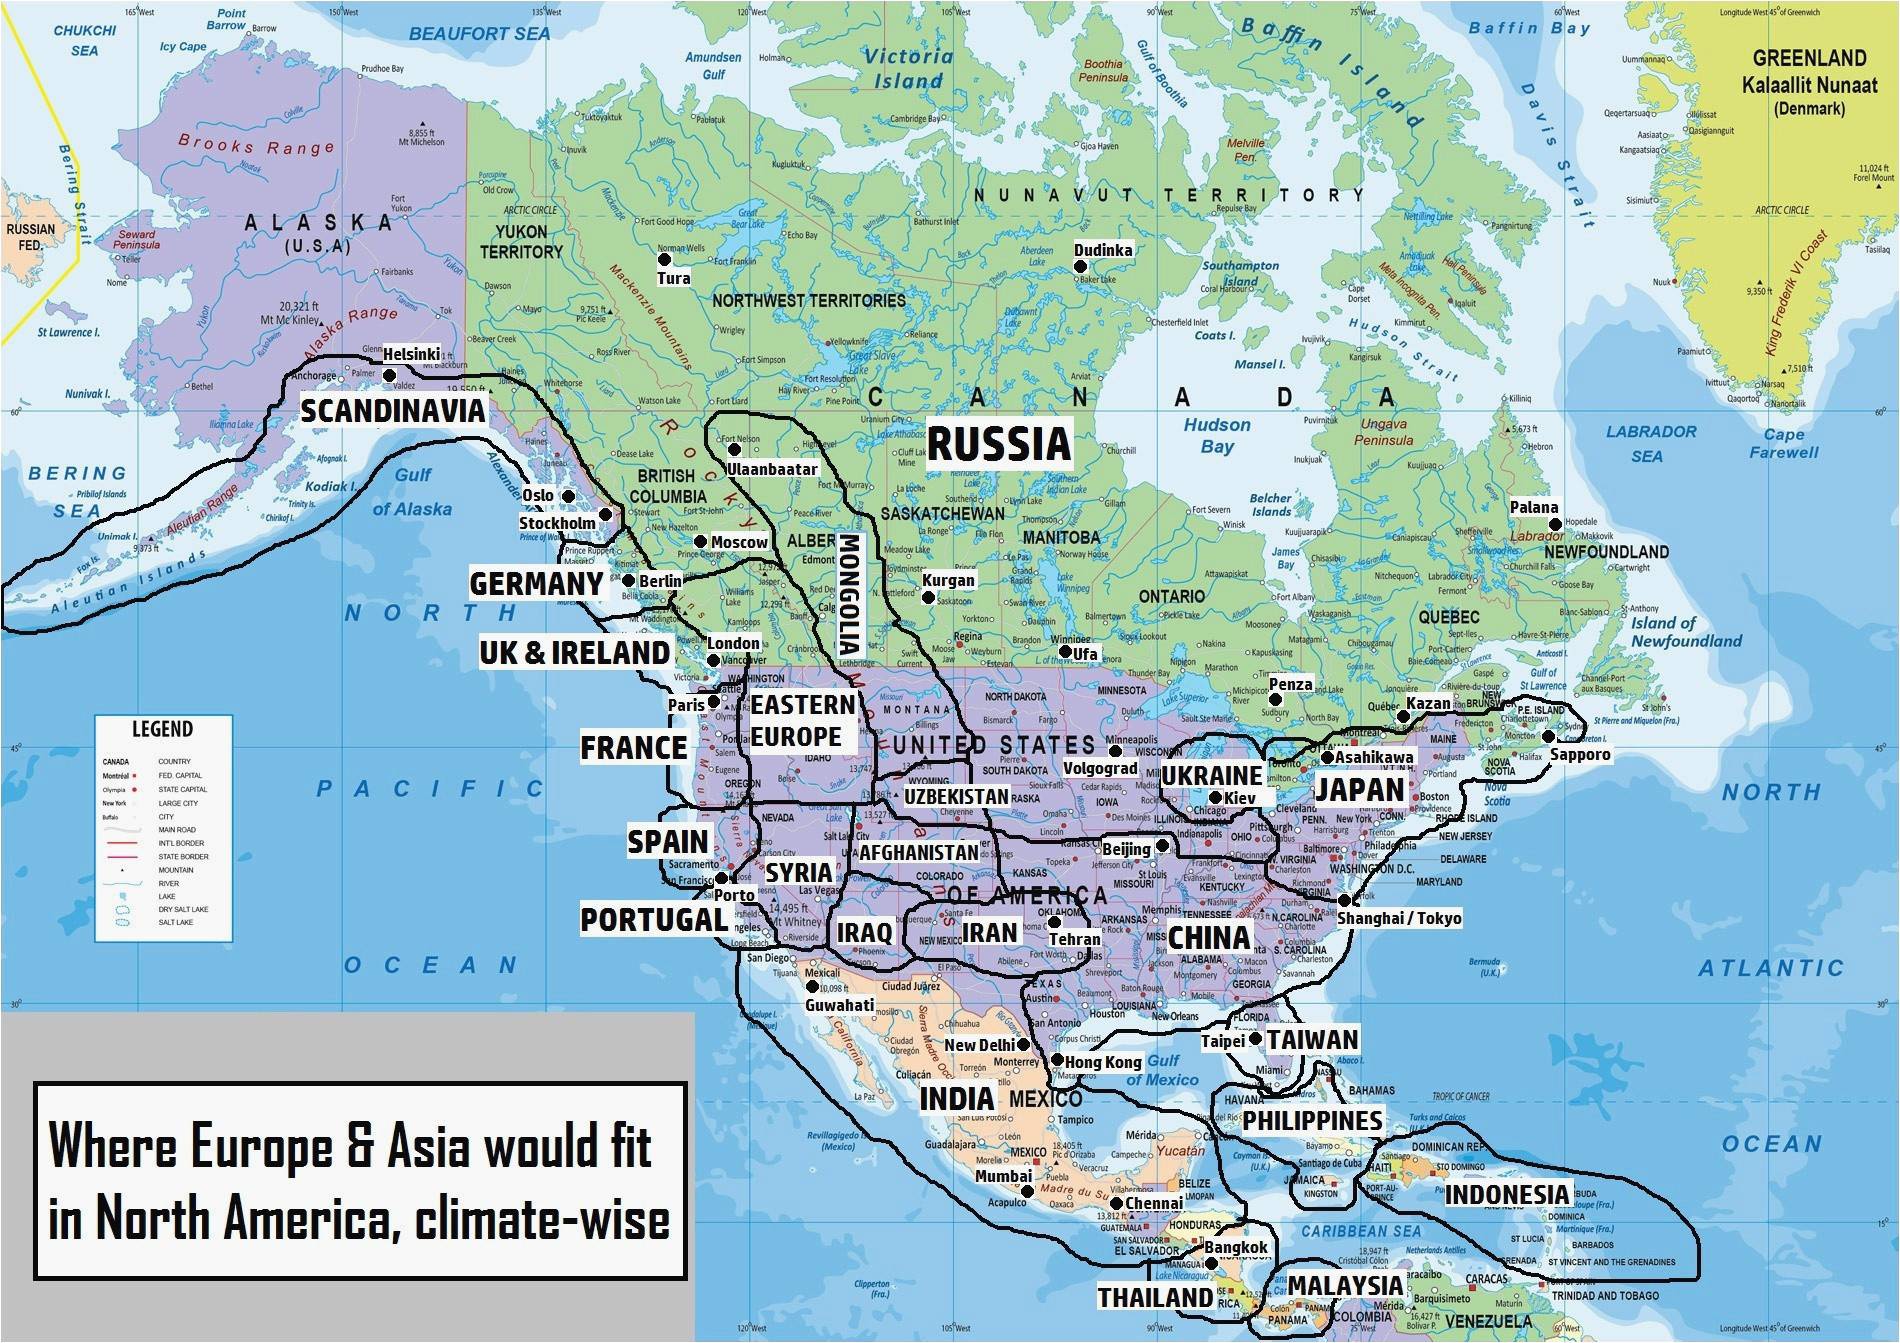 Goggle Maps Ireland California Landform Map north America Map Stock Us Canada Map New I